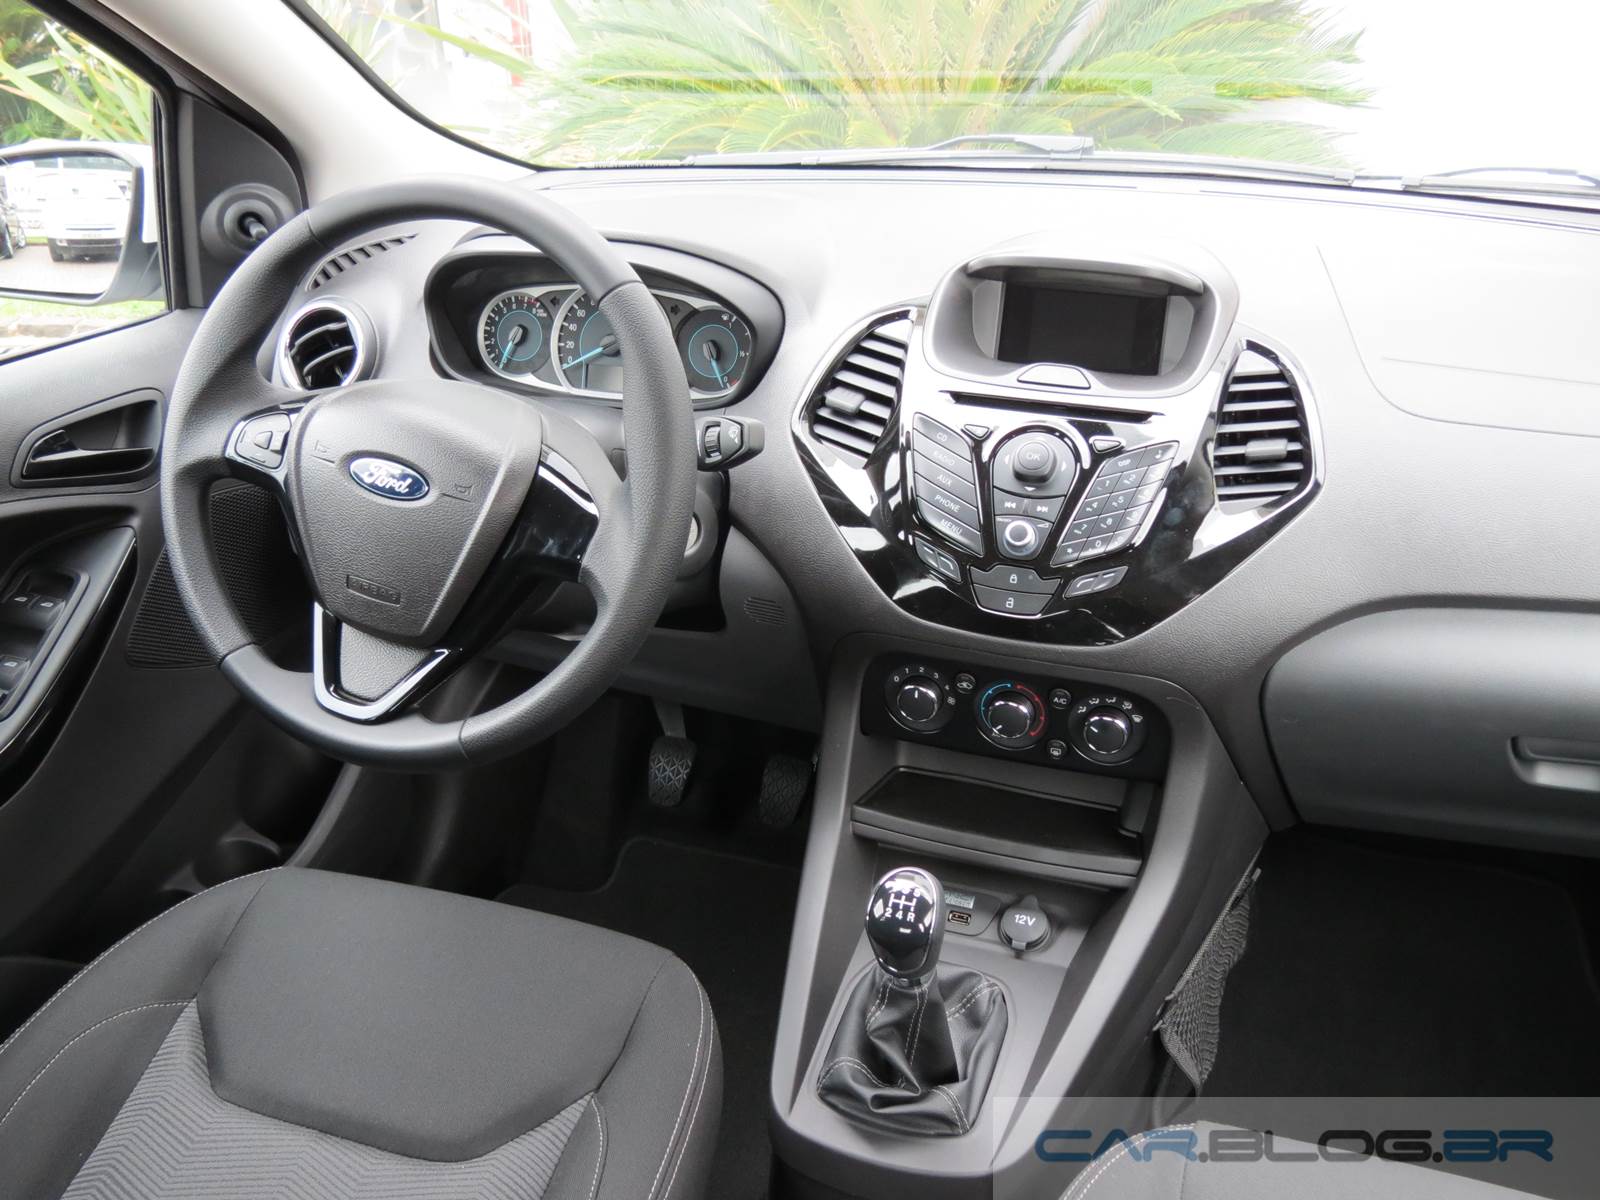 Novo Ford Ka+ Sedan SEL - interior